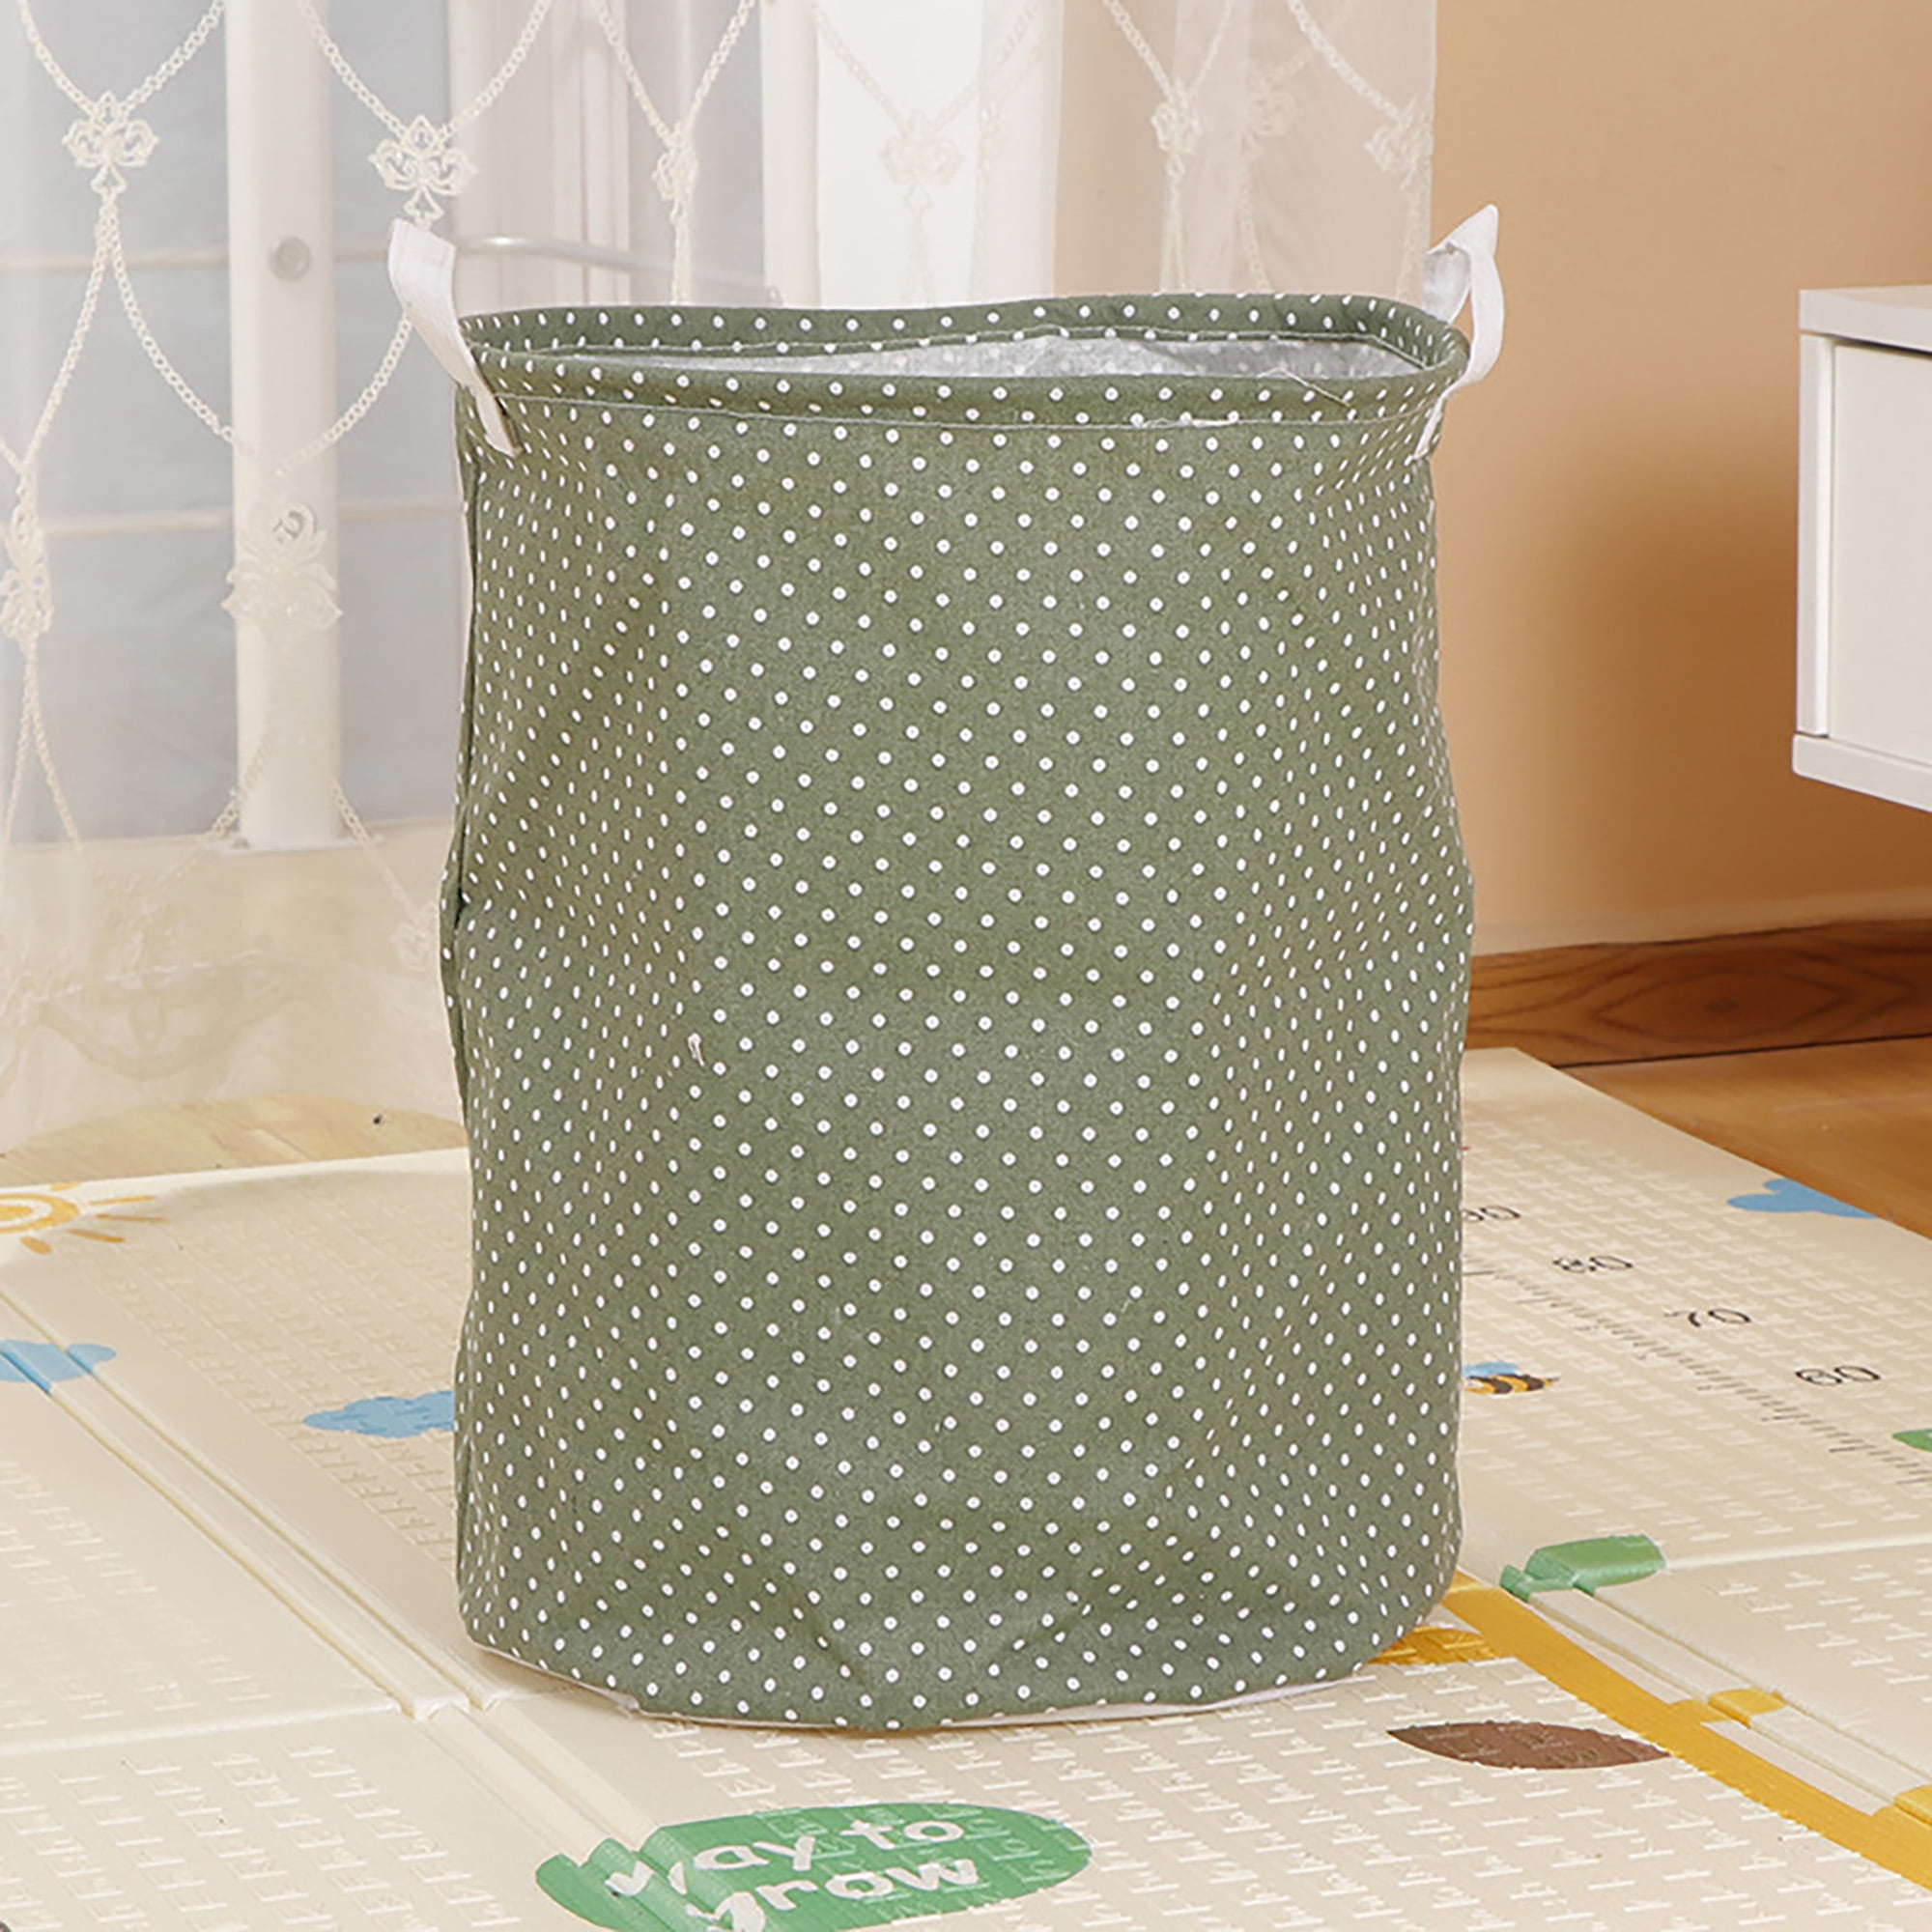 Waterproof Linen Cotton Laundry Hamper Clothes Basket Storage Basket Folding Bag 